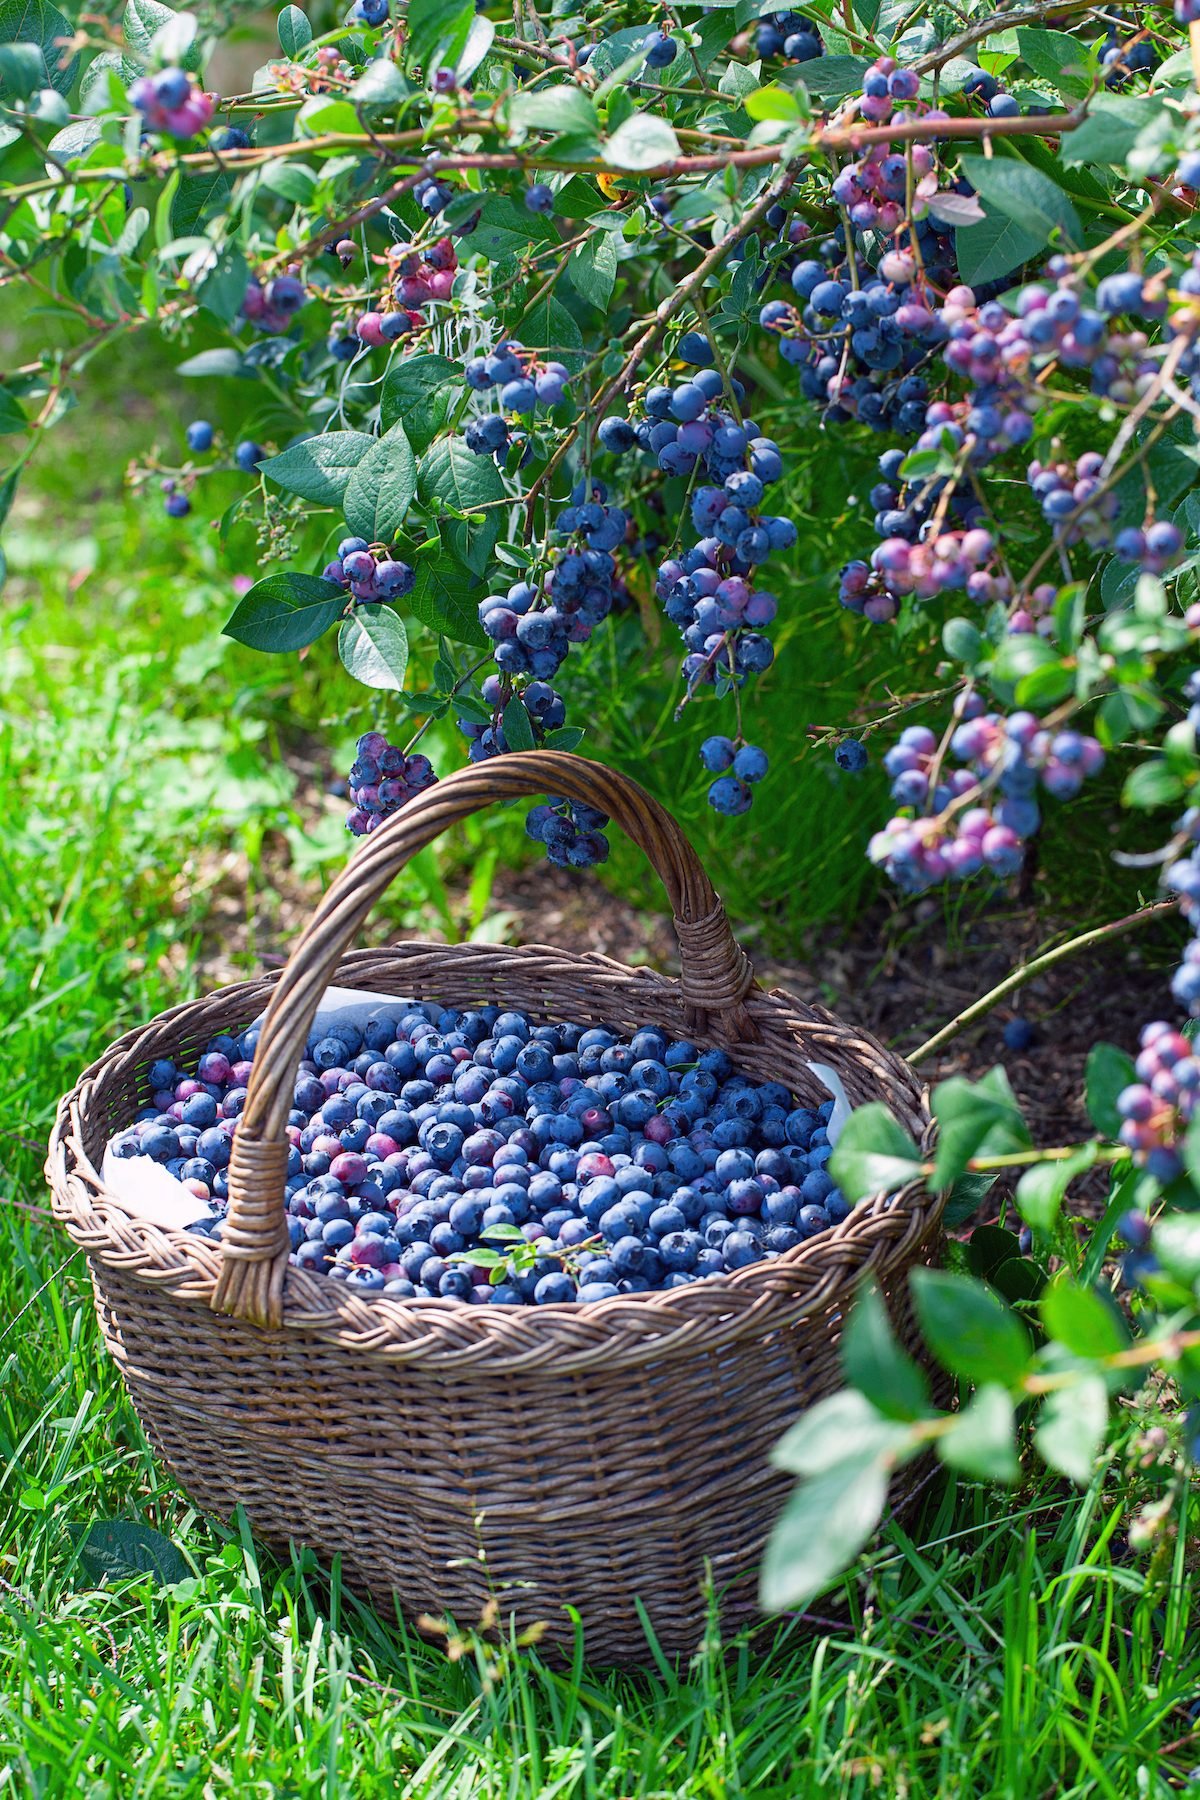 Growing,blueberries edible shrubs